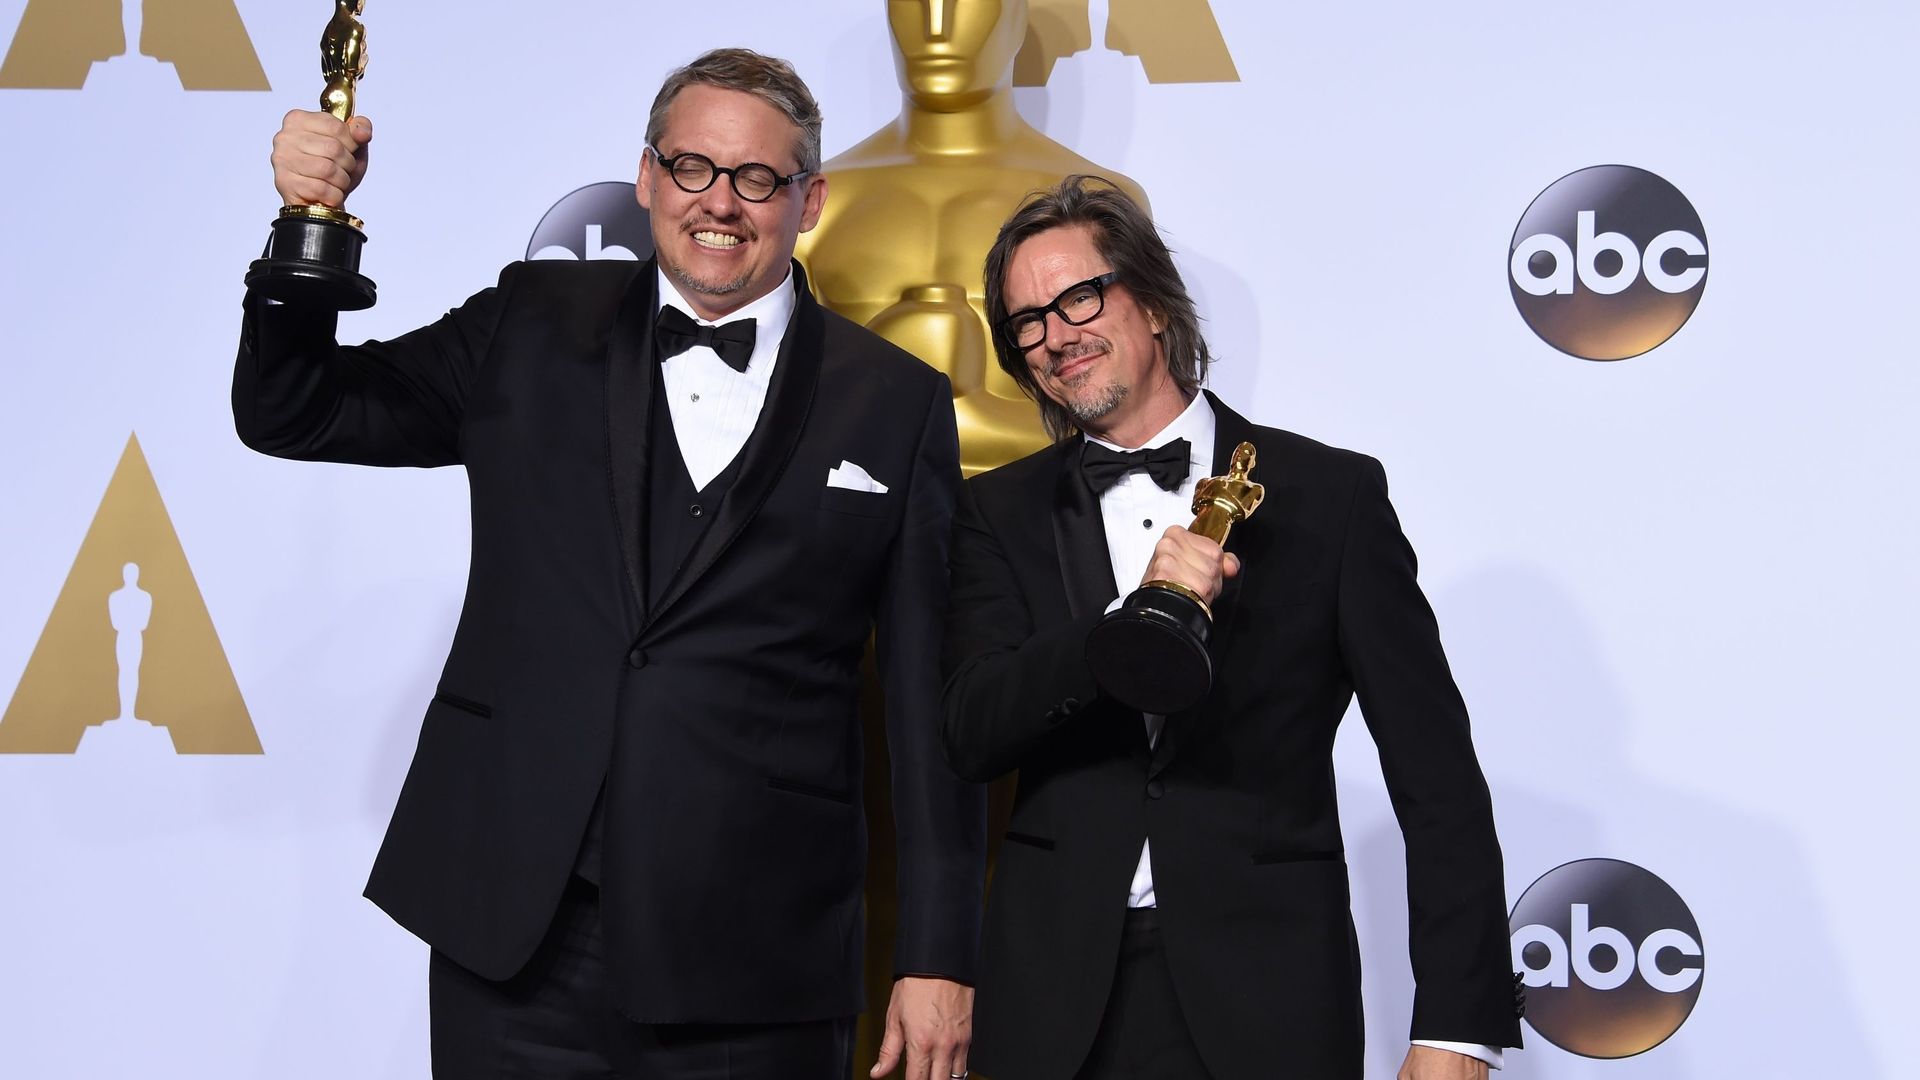 Oscars 2016 - La saga journalistique "Spotlight" remporte l'Oscar du meilleur film